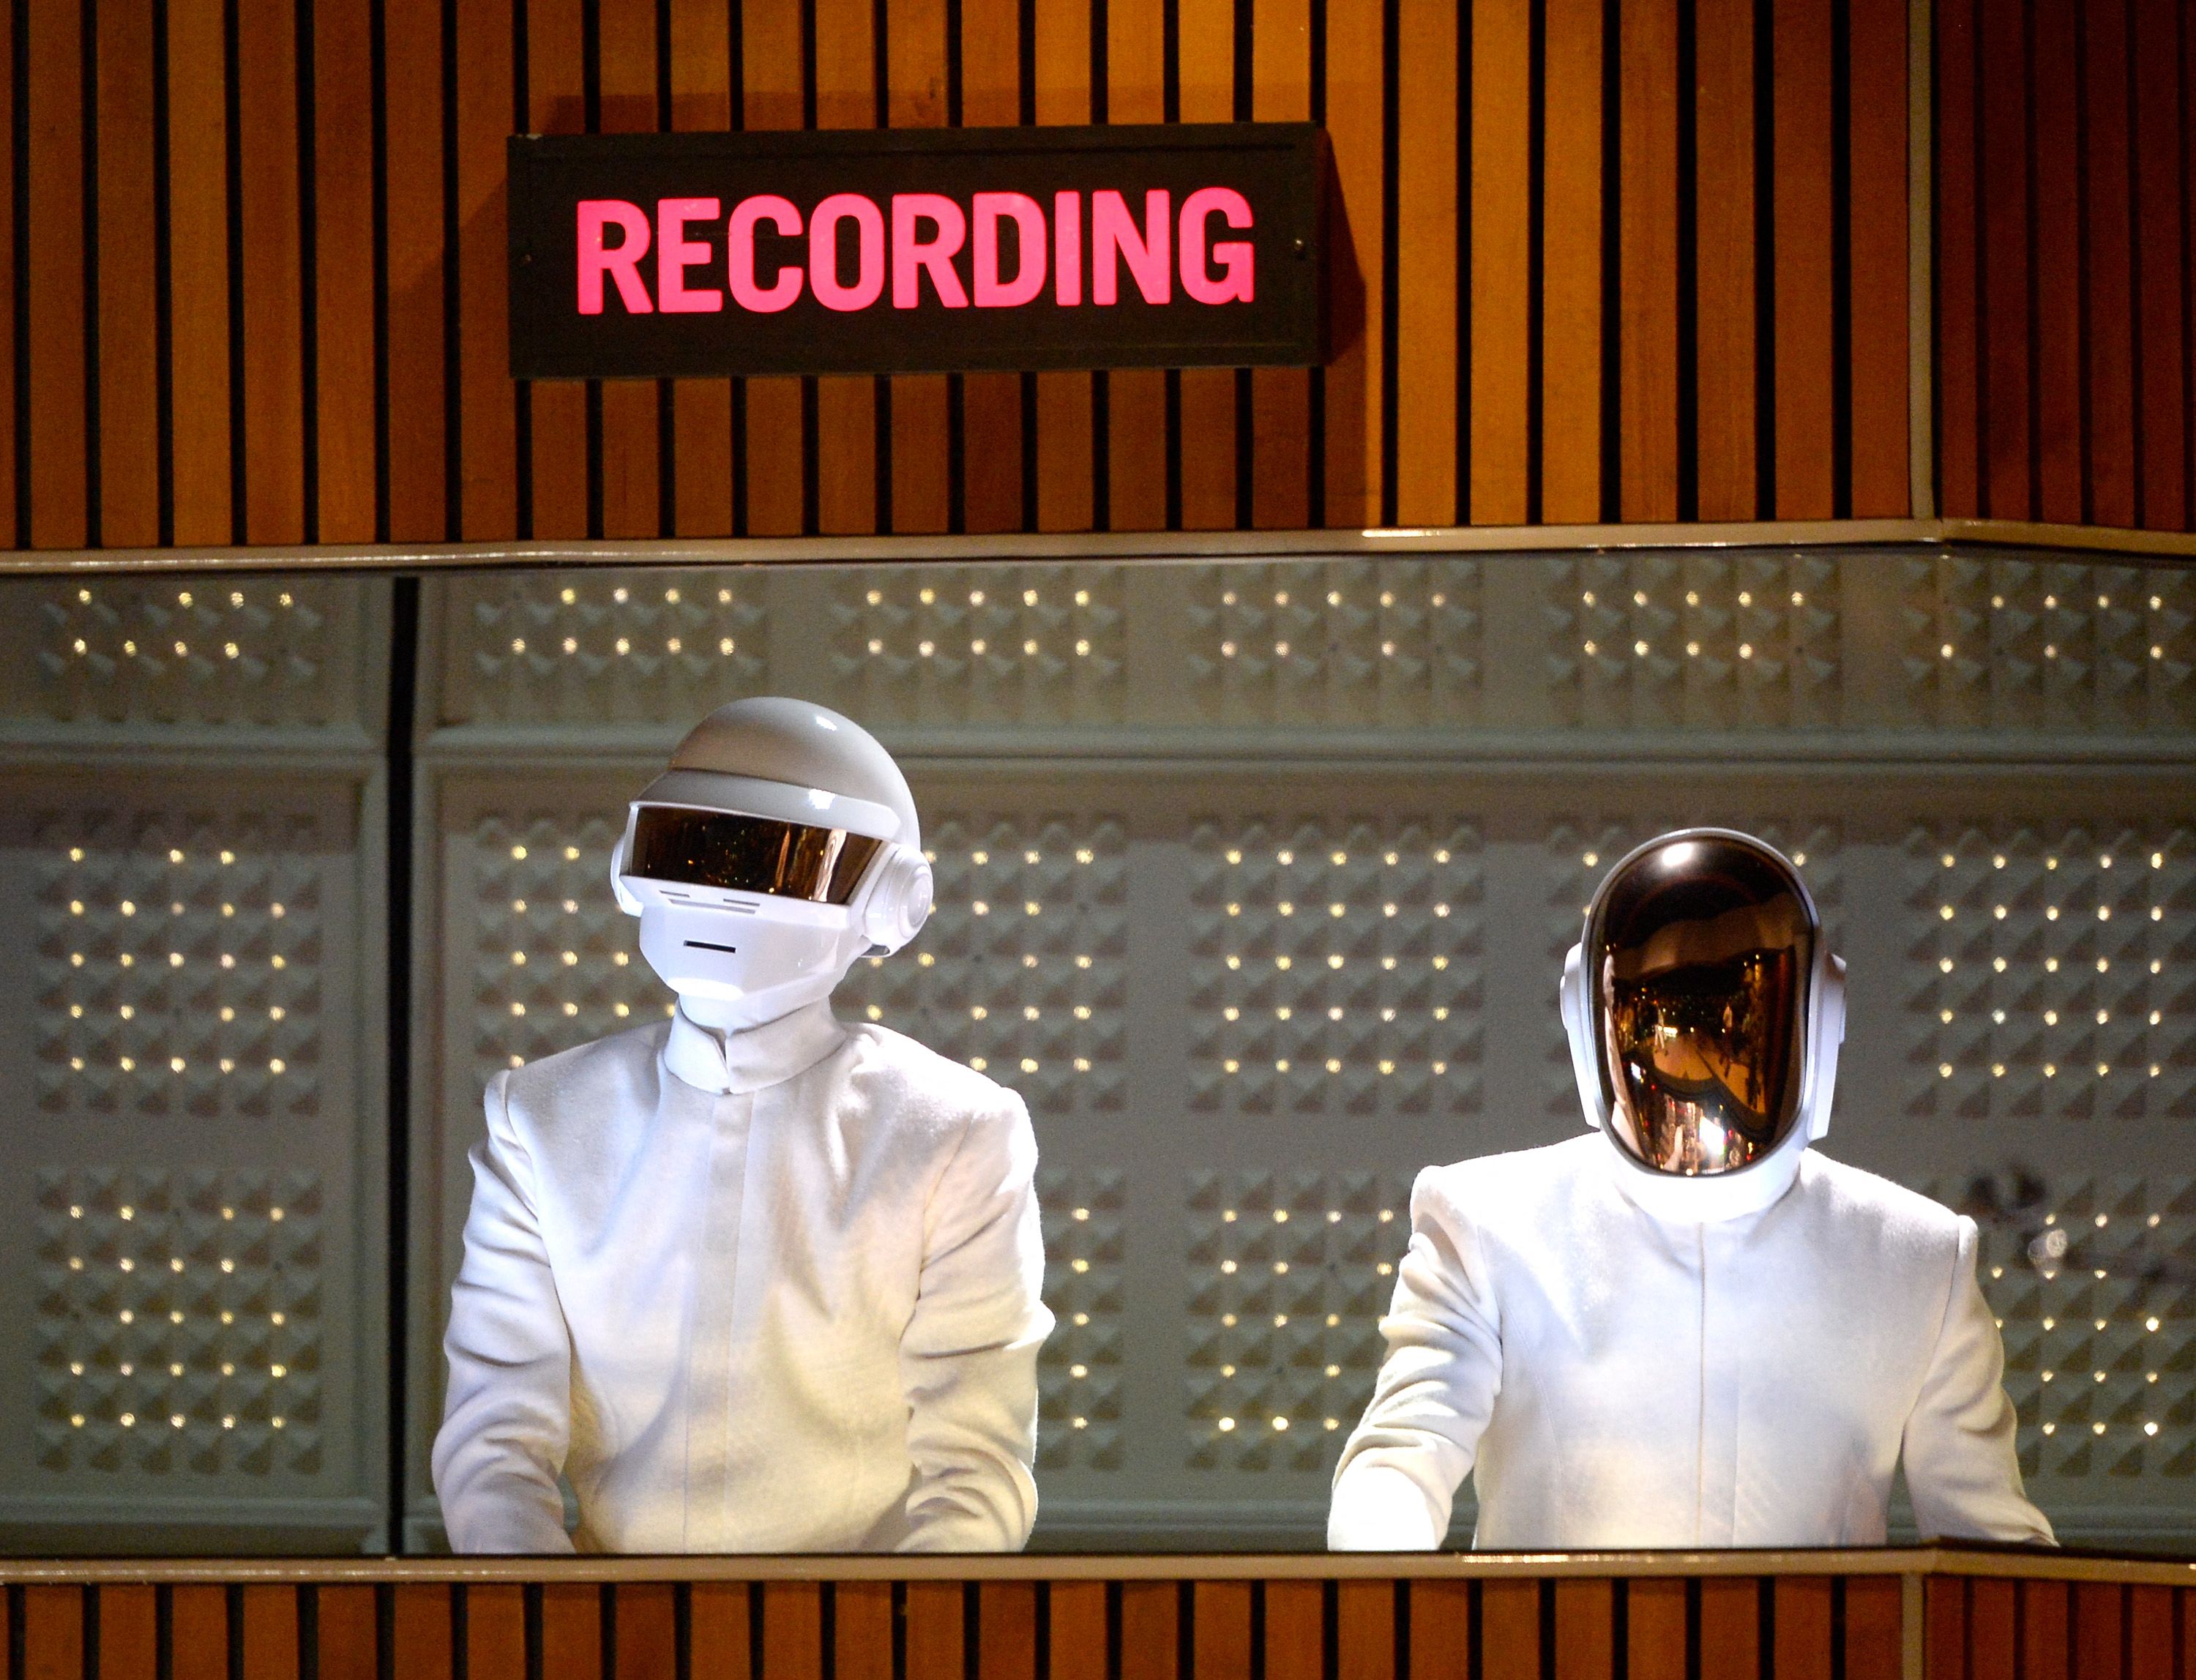 El dúo francés Daft Punk anunció su separación. (Foto Prensa Libre: EFE)